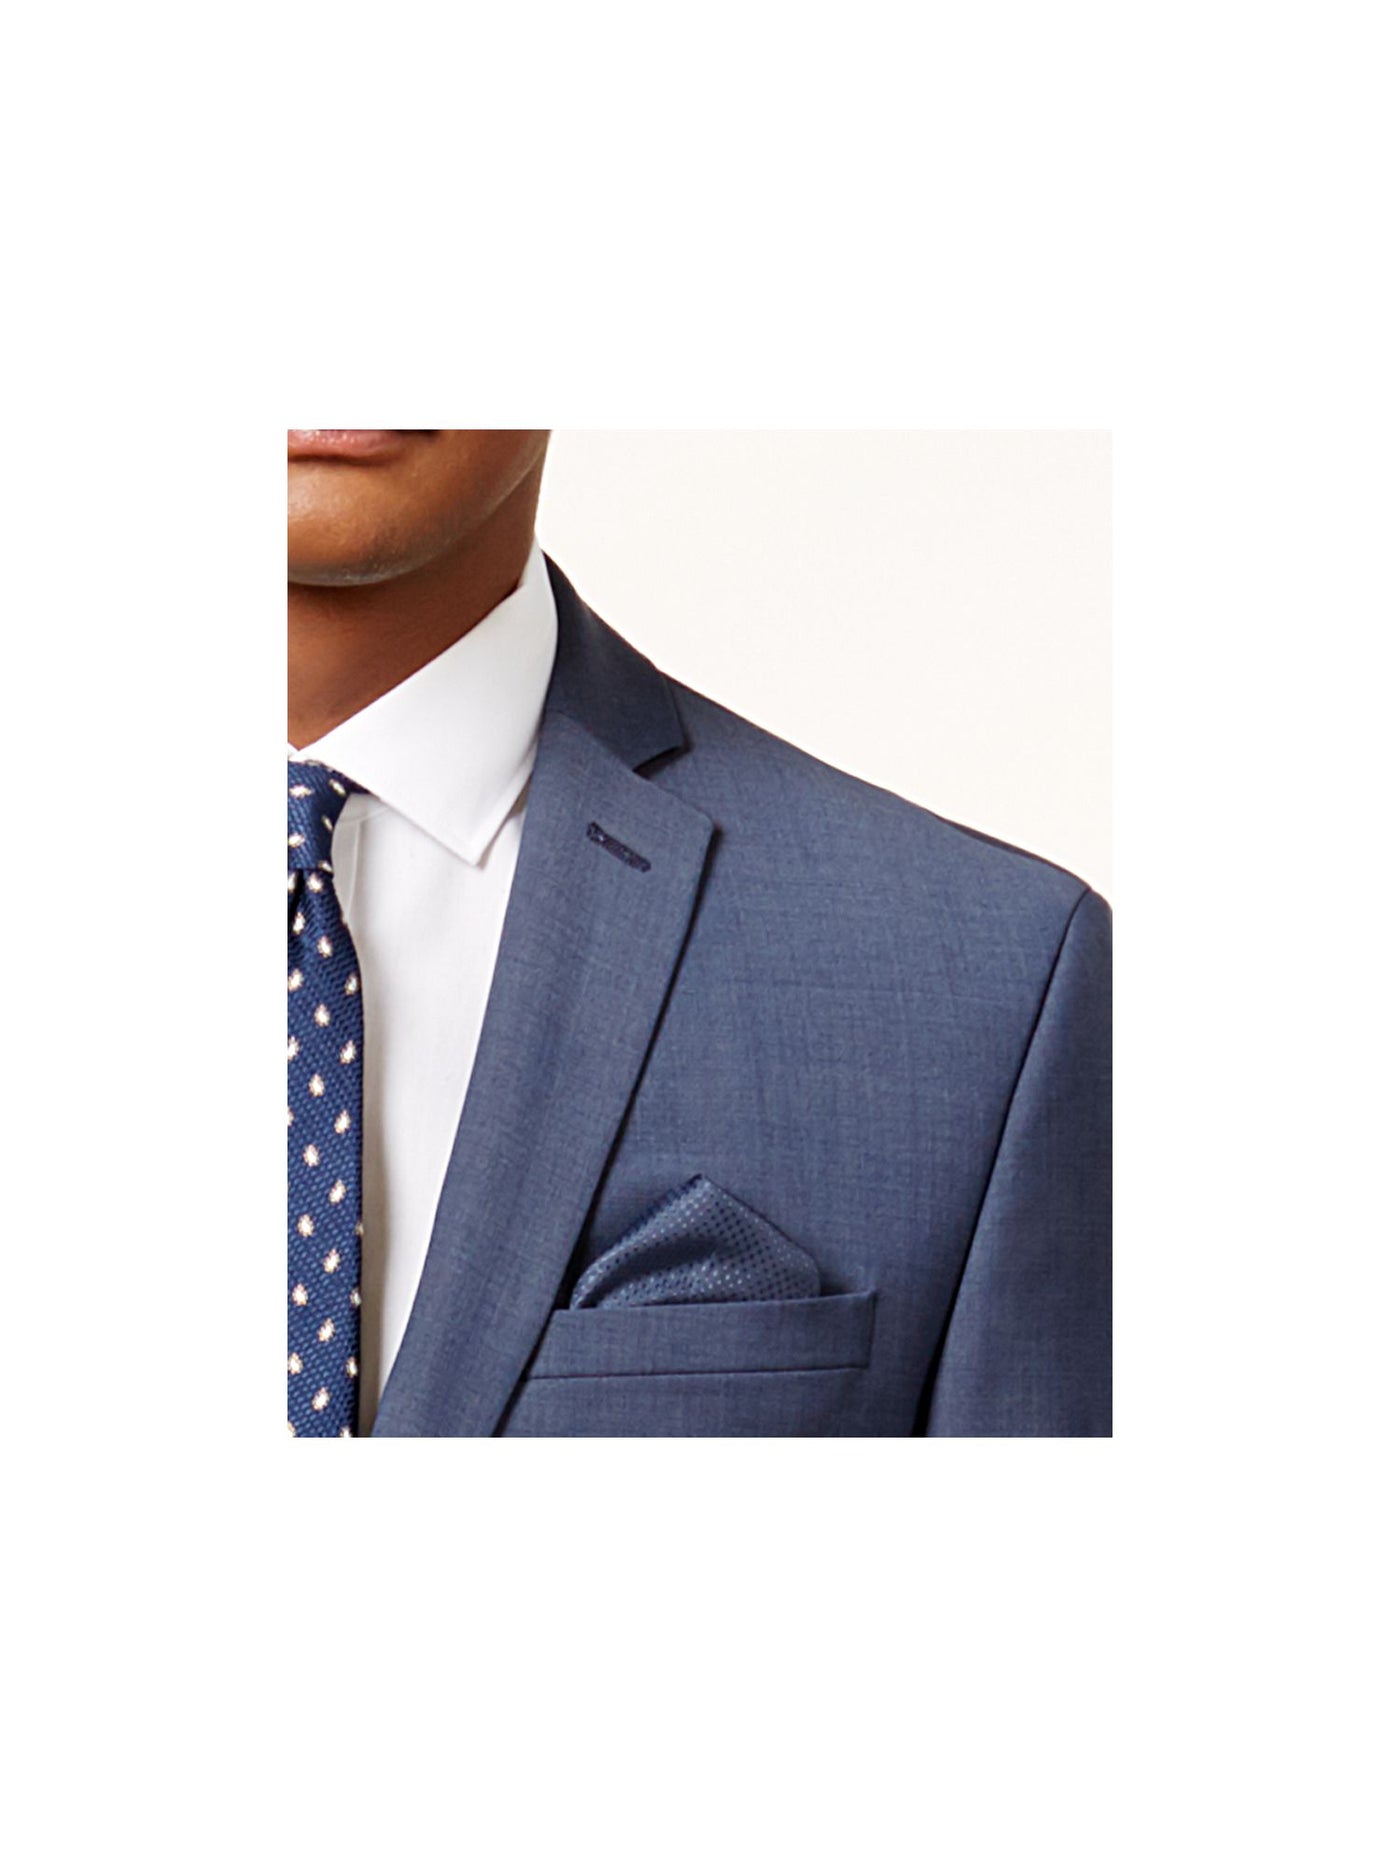 BAR III Mens Blue Lined Single Breasted Stretch Slim Fit Wrinkle Resistant Suit Separate Blazer Jacket 44R